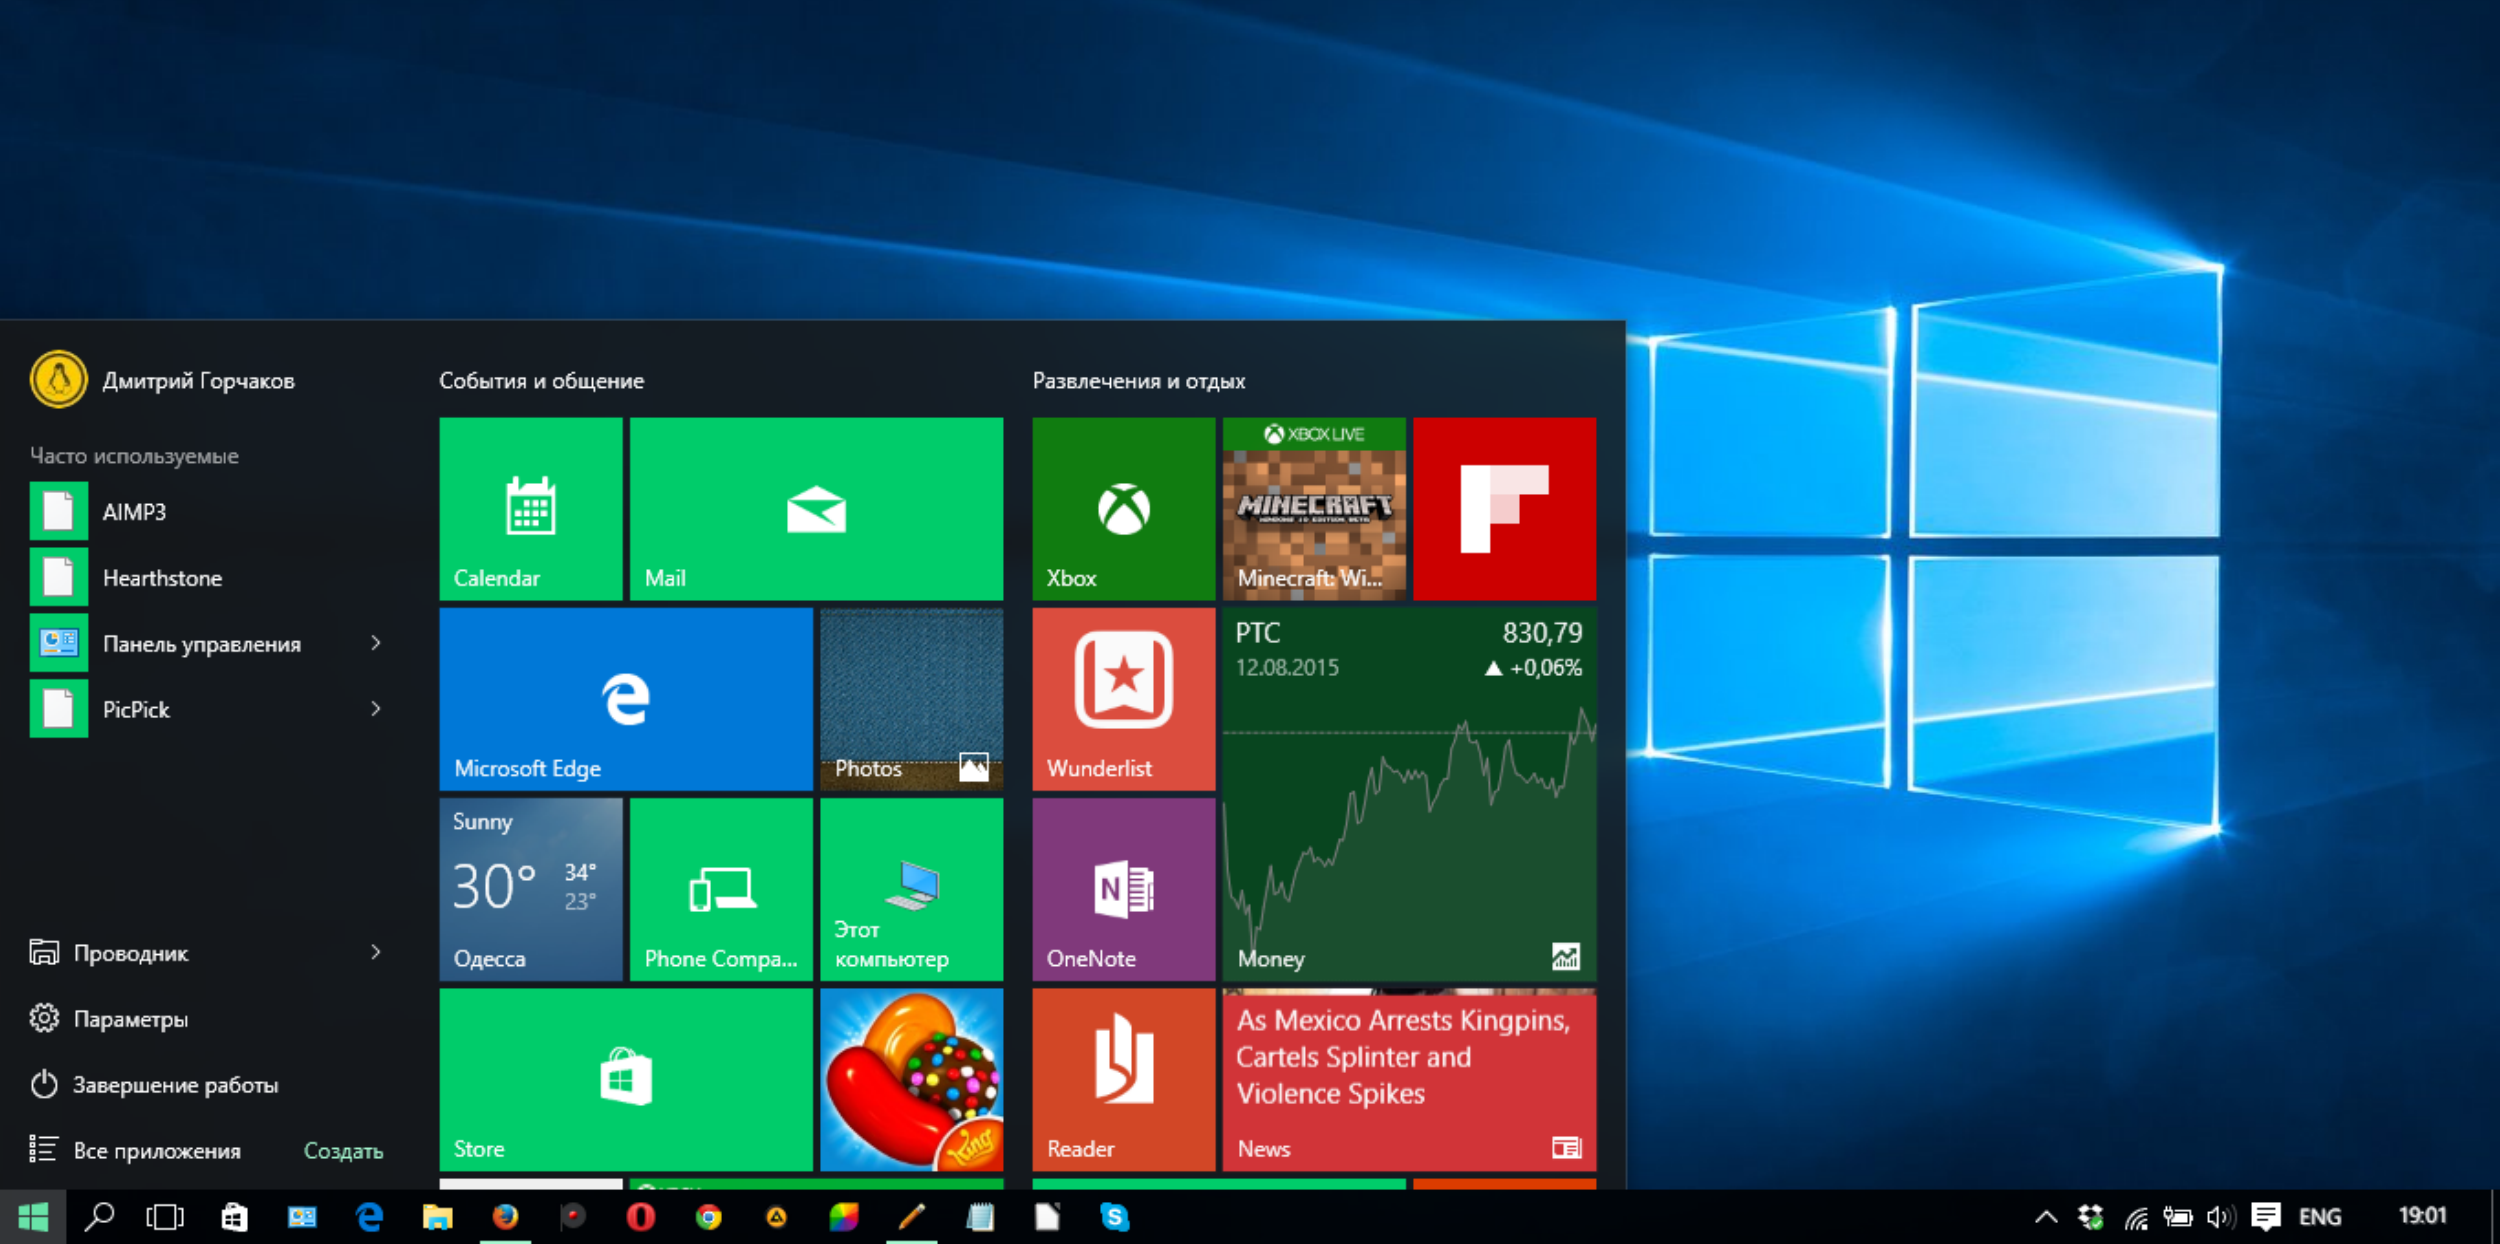 Утилиты для windows 10. Встроенные приложения Windows. Встроенные программы Windows 10. Приложения Windows 10. Стандартные программы виндовс 10.